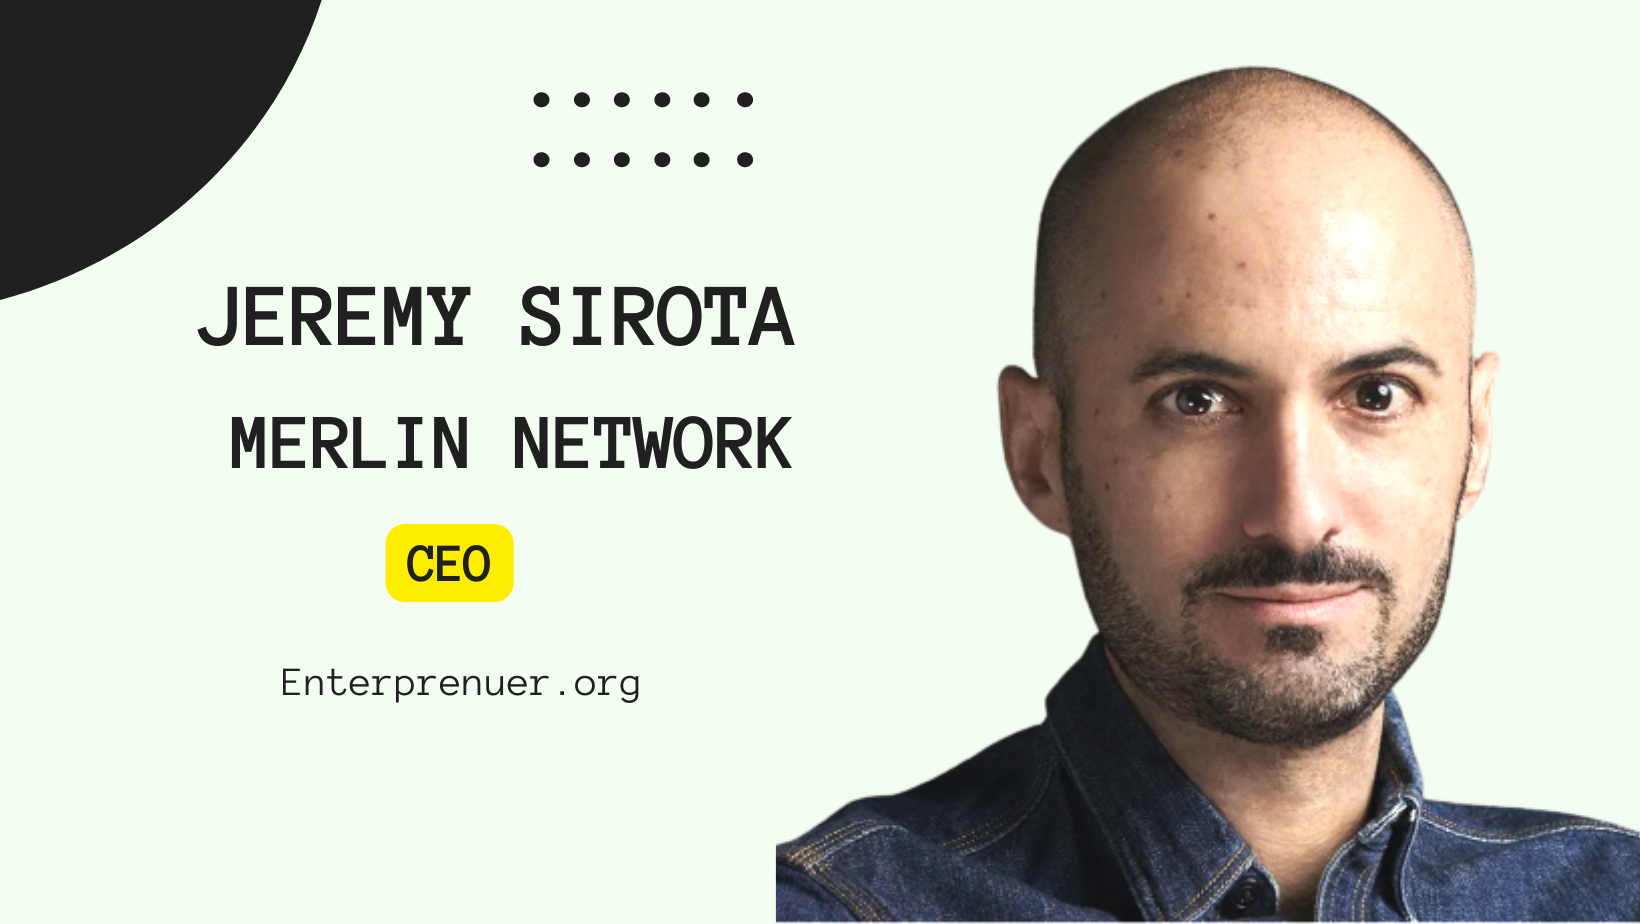 Meet Jeremy Sirota, CEO of Merlin Network